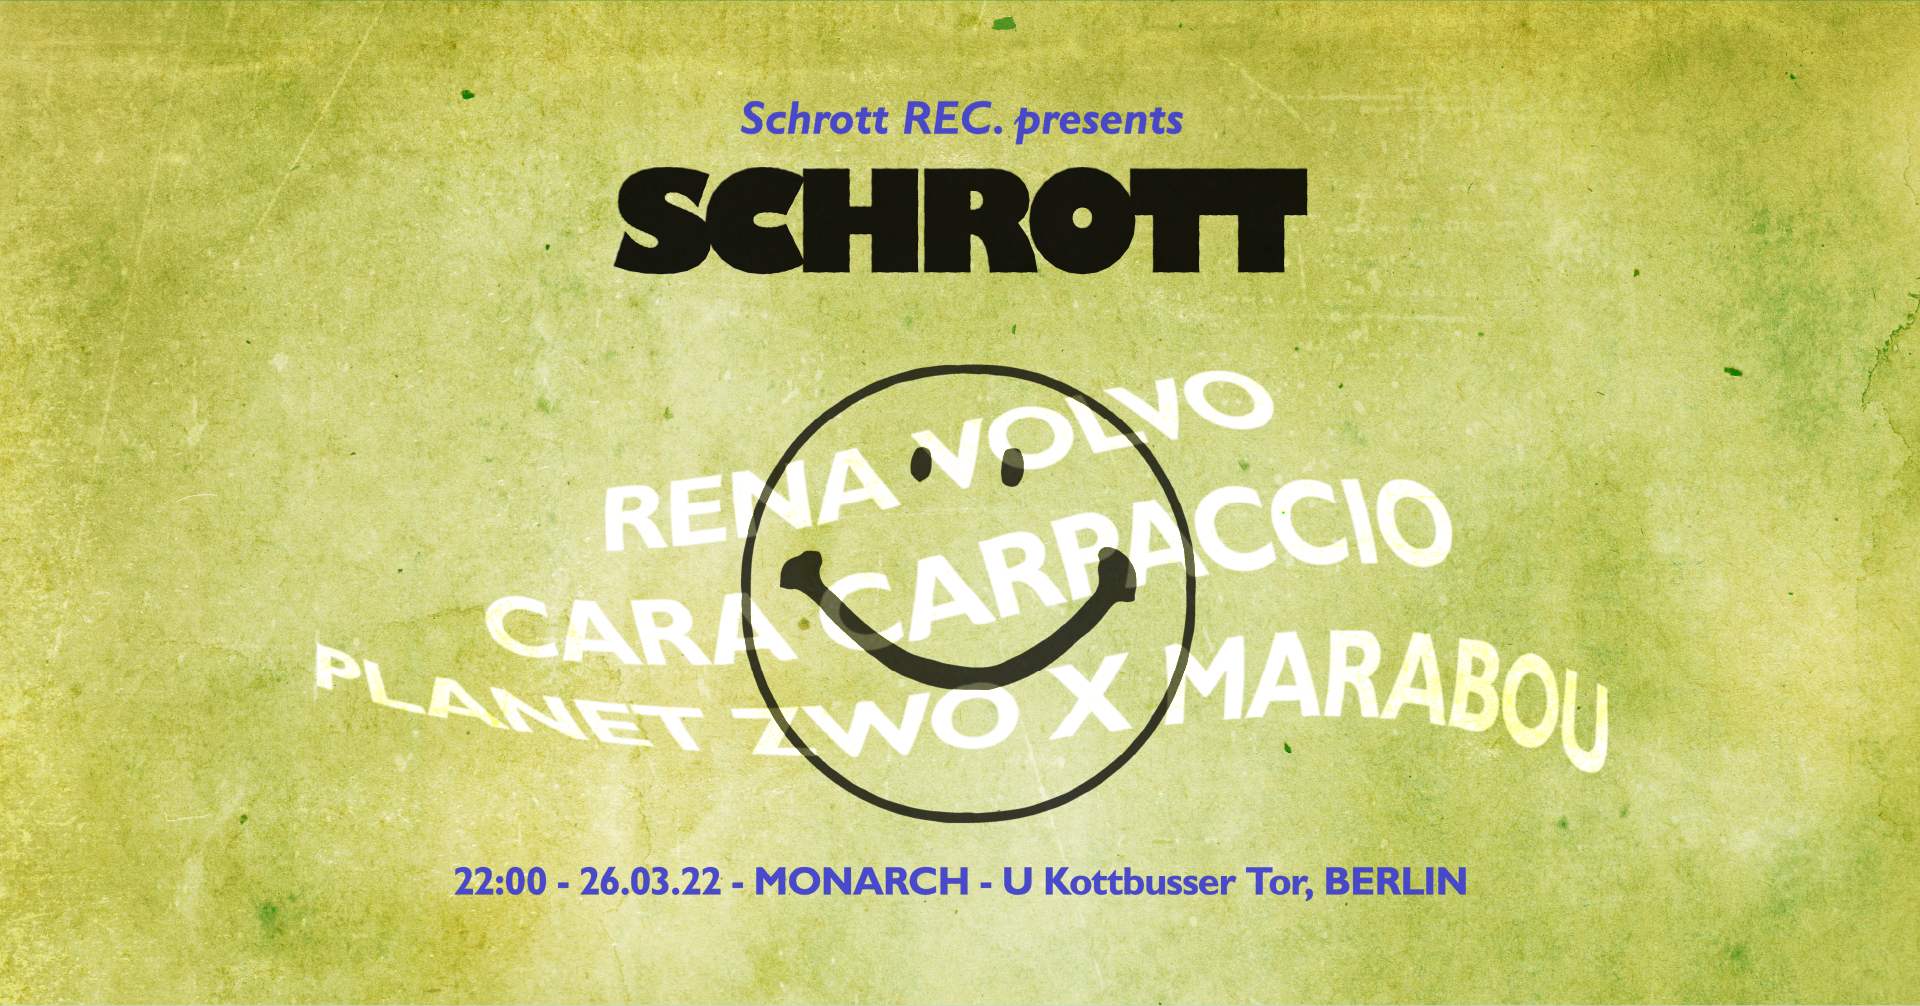 Schrott REC. presents: SCHROTT - Página frontal